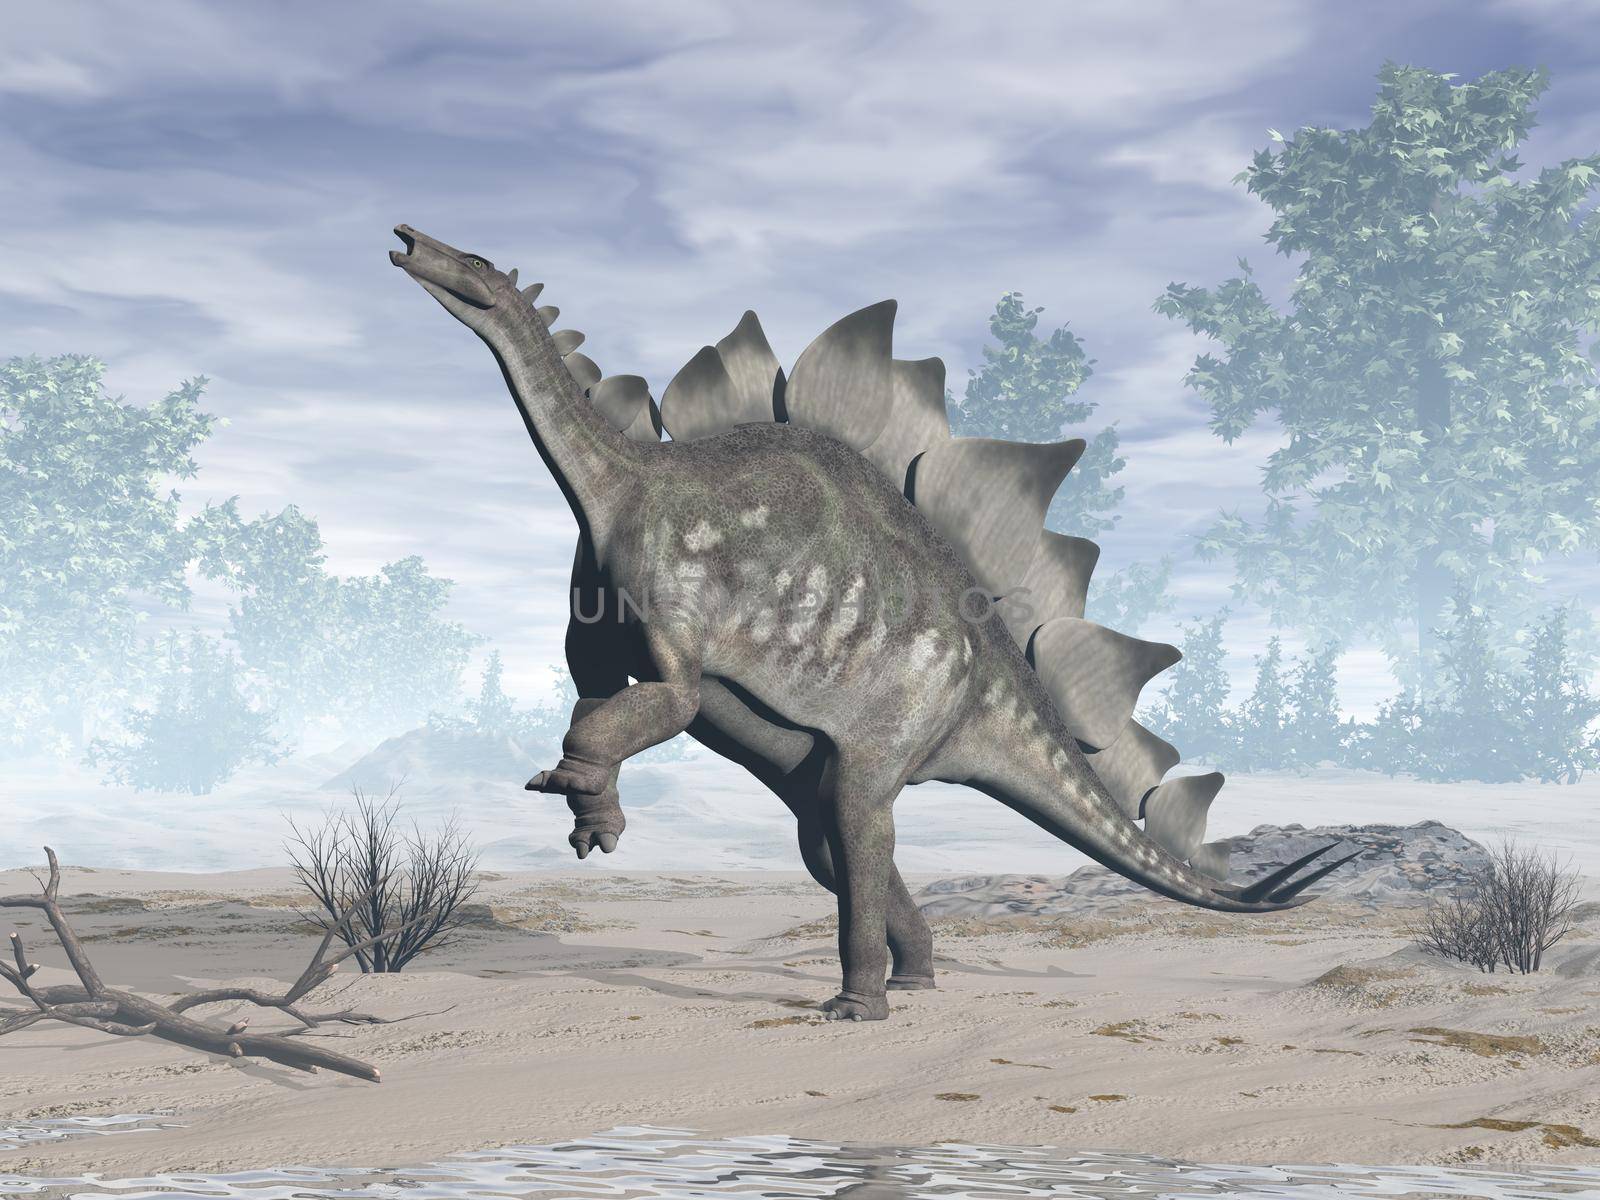 Stegosaurus dinosaur in the desert - 3D render by Elenaphotos21